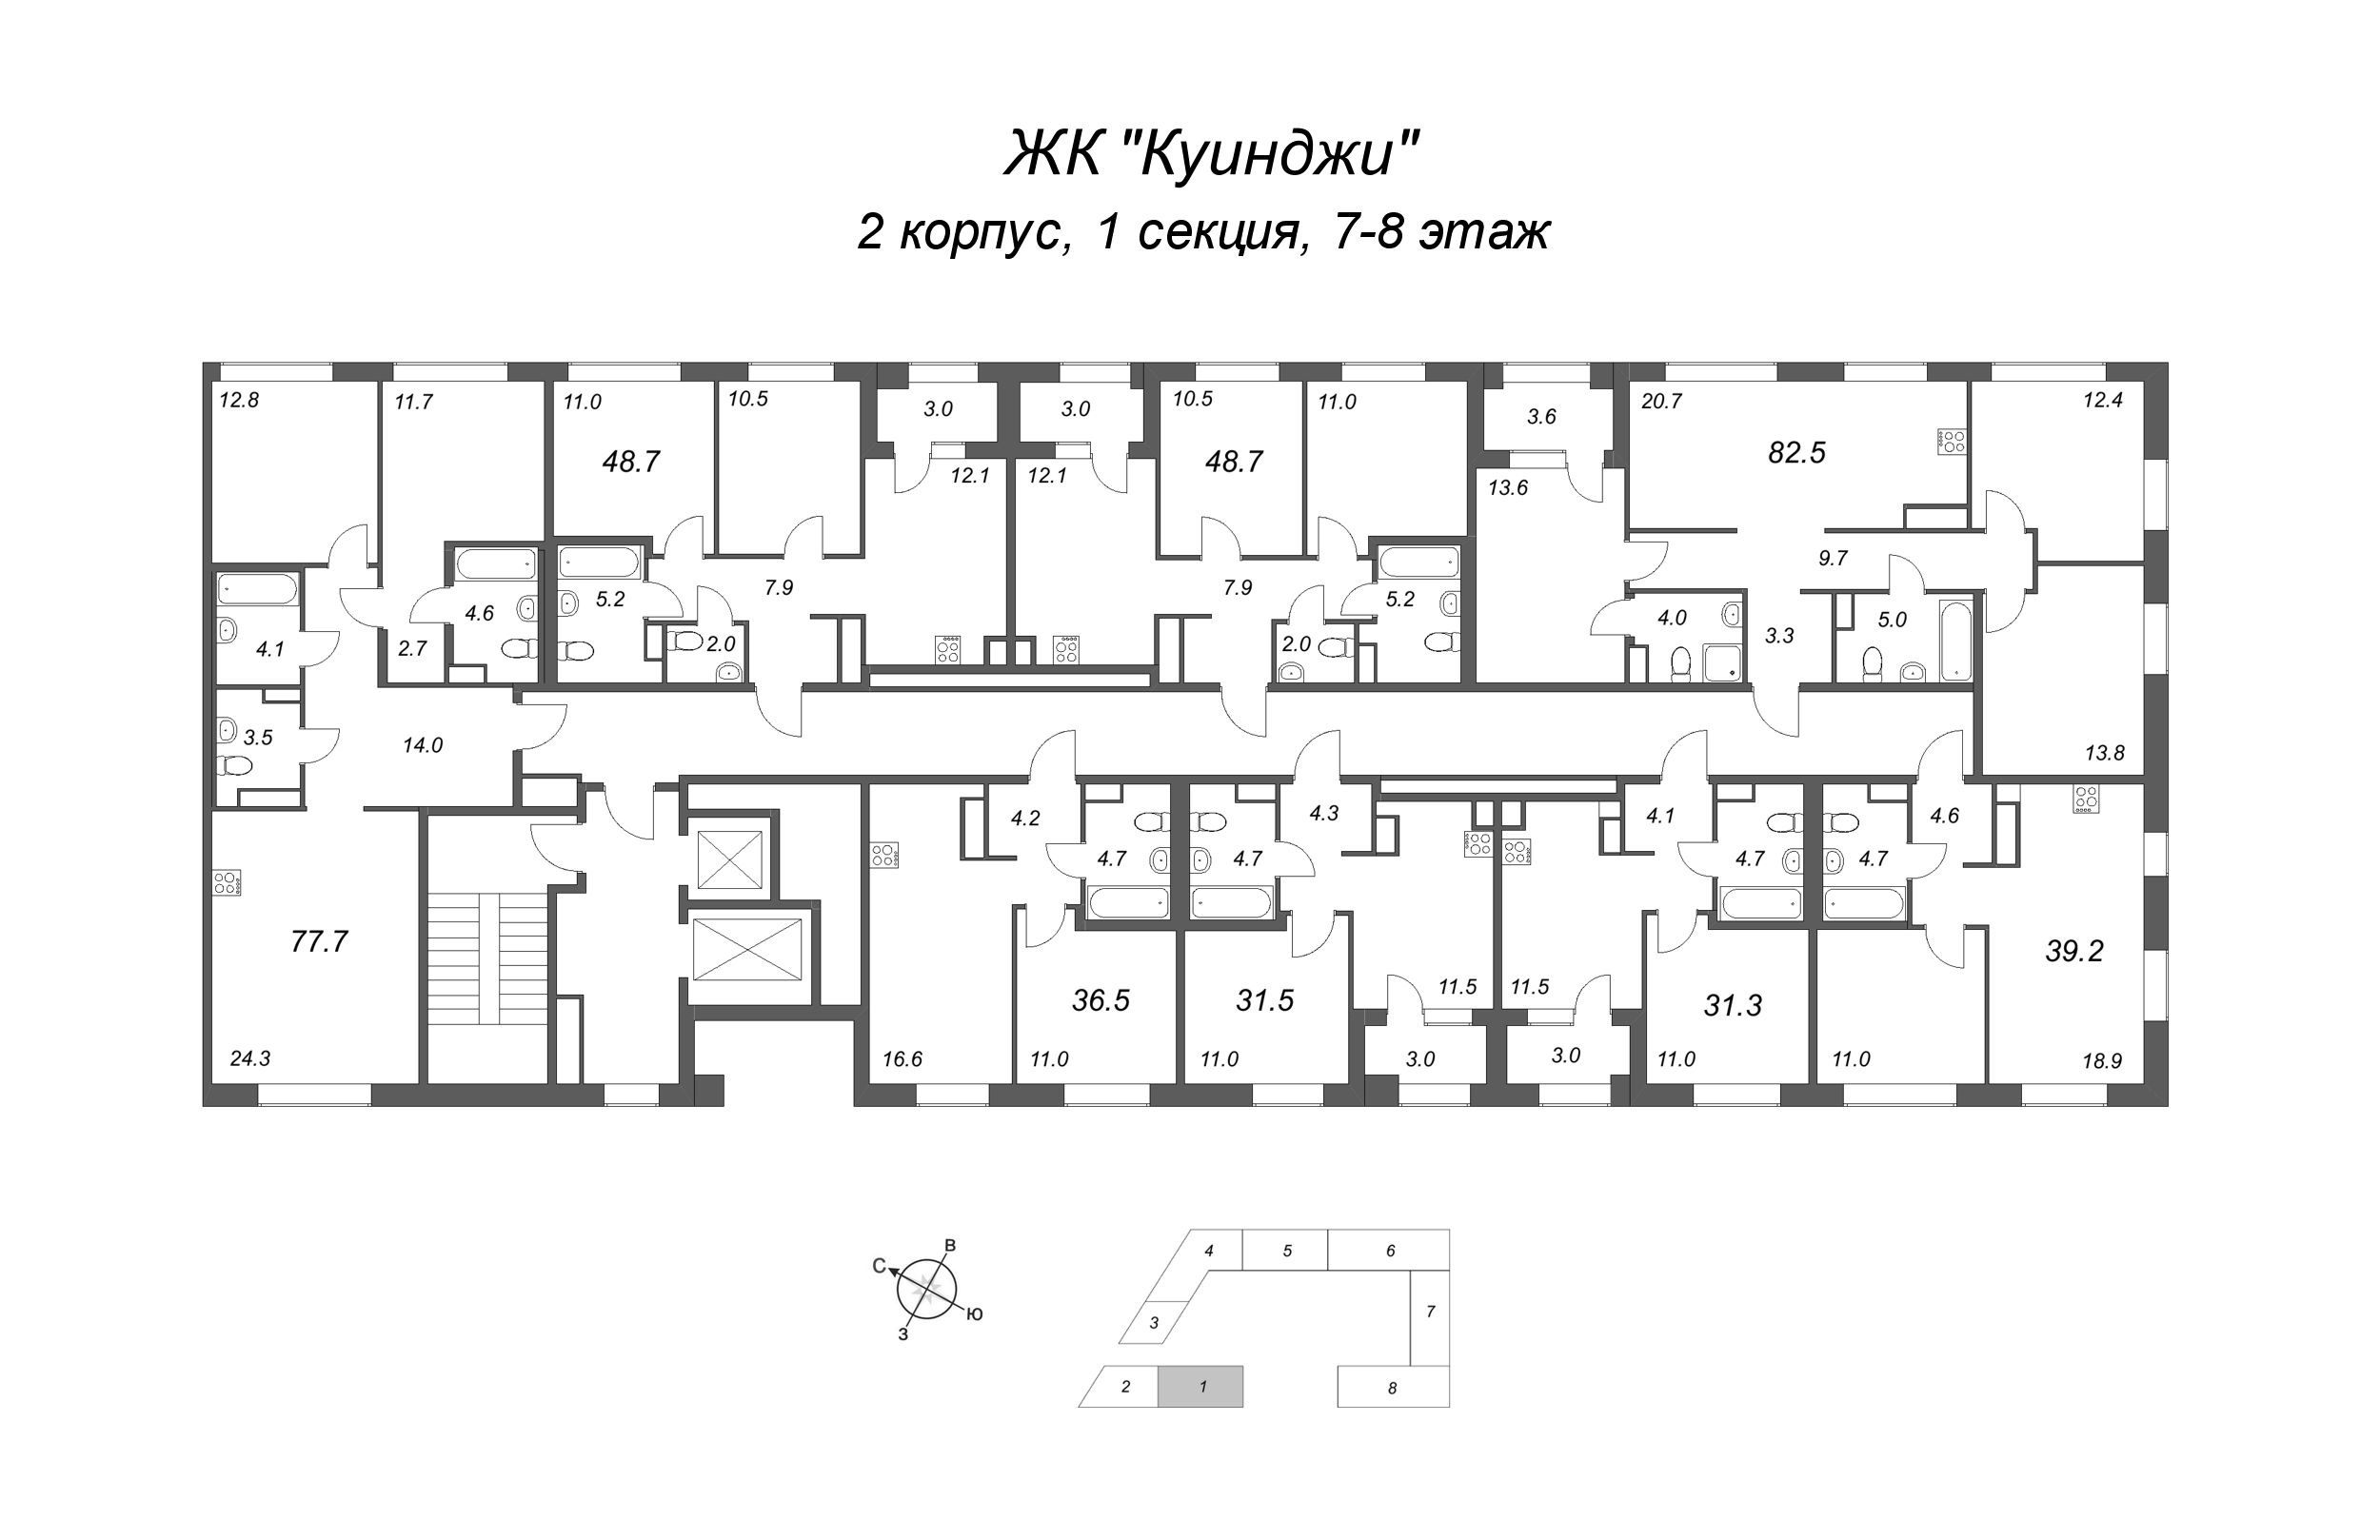 4-комнатная (Евро) квартира, 82.5 м² в ЖК "Куинджи" - планировка этажа